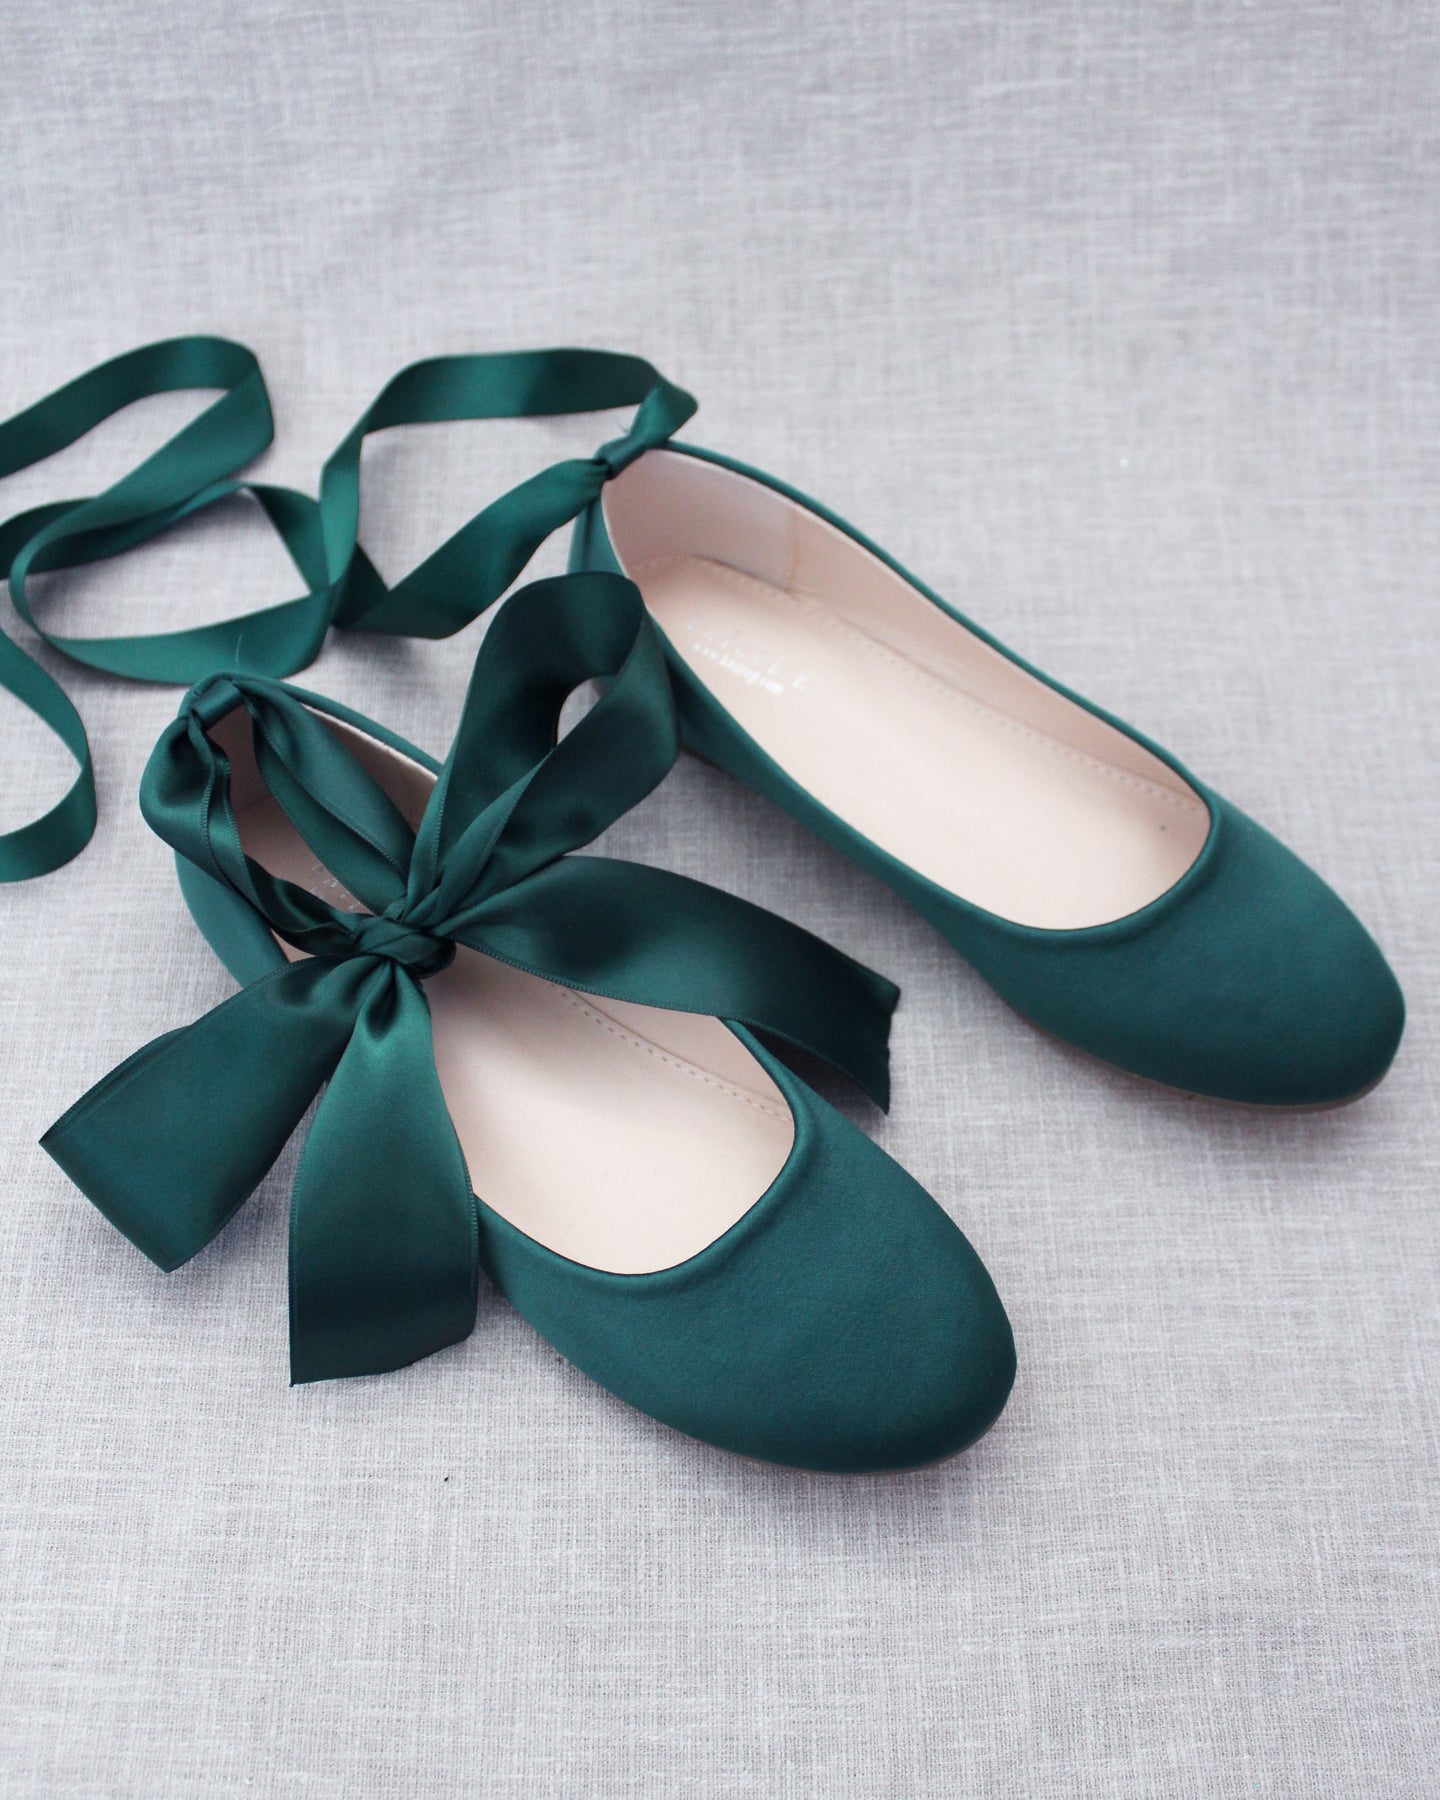 Cute Hunter Green Shoes - Green Flats - Pointed Flats - $28.00 - Lulus